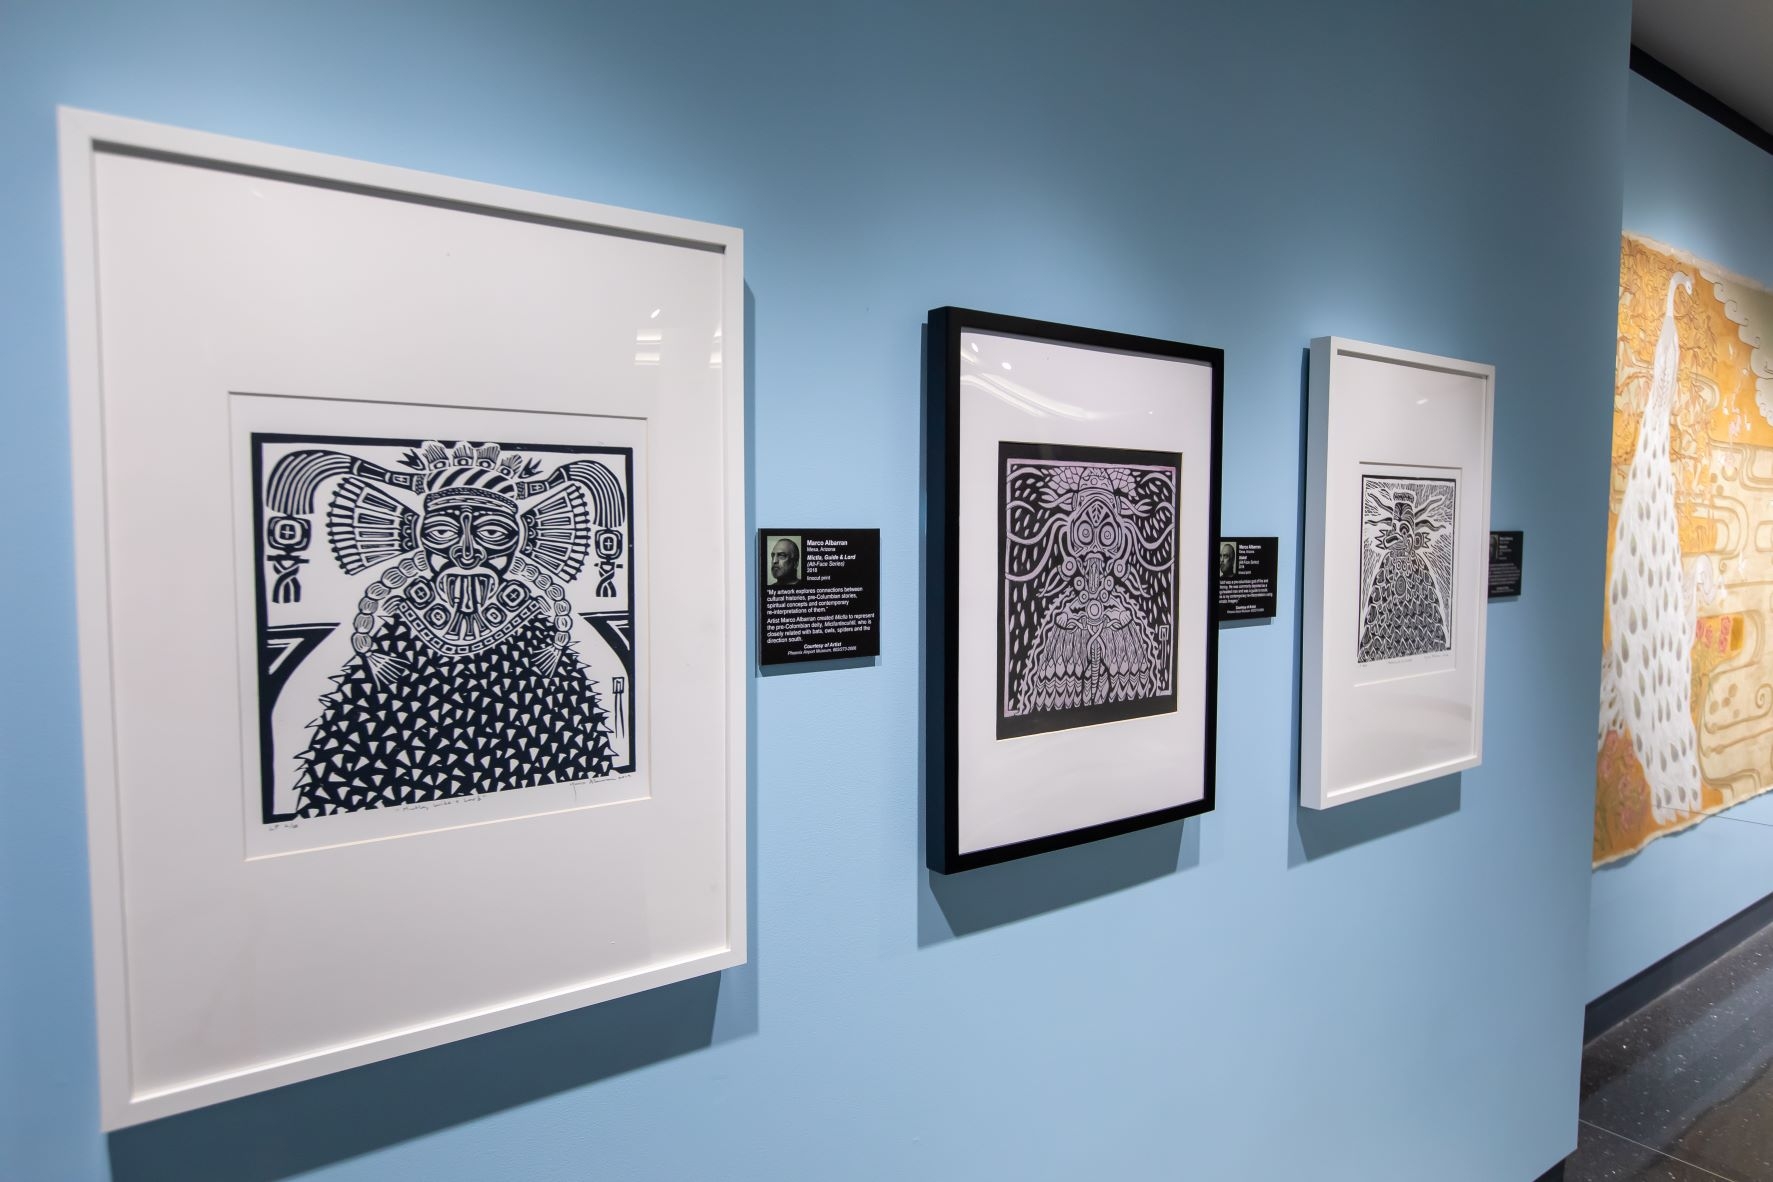 Linocut printmaking artwork from Marco Albarran is on display at the Phoenix Airport Museum